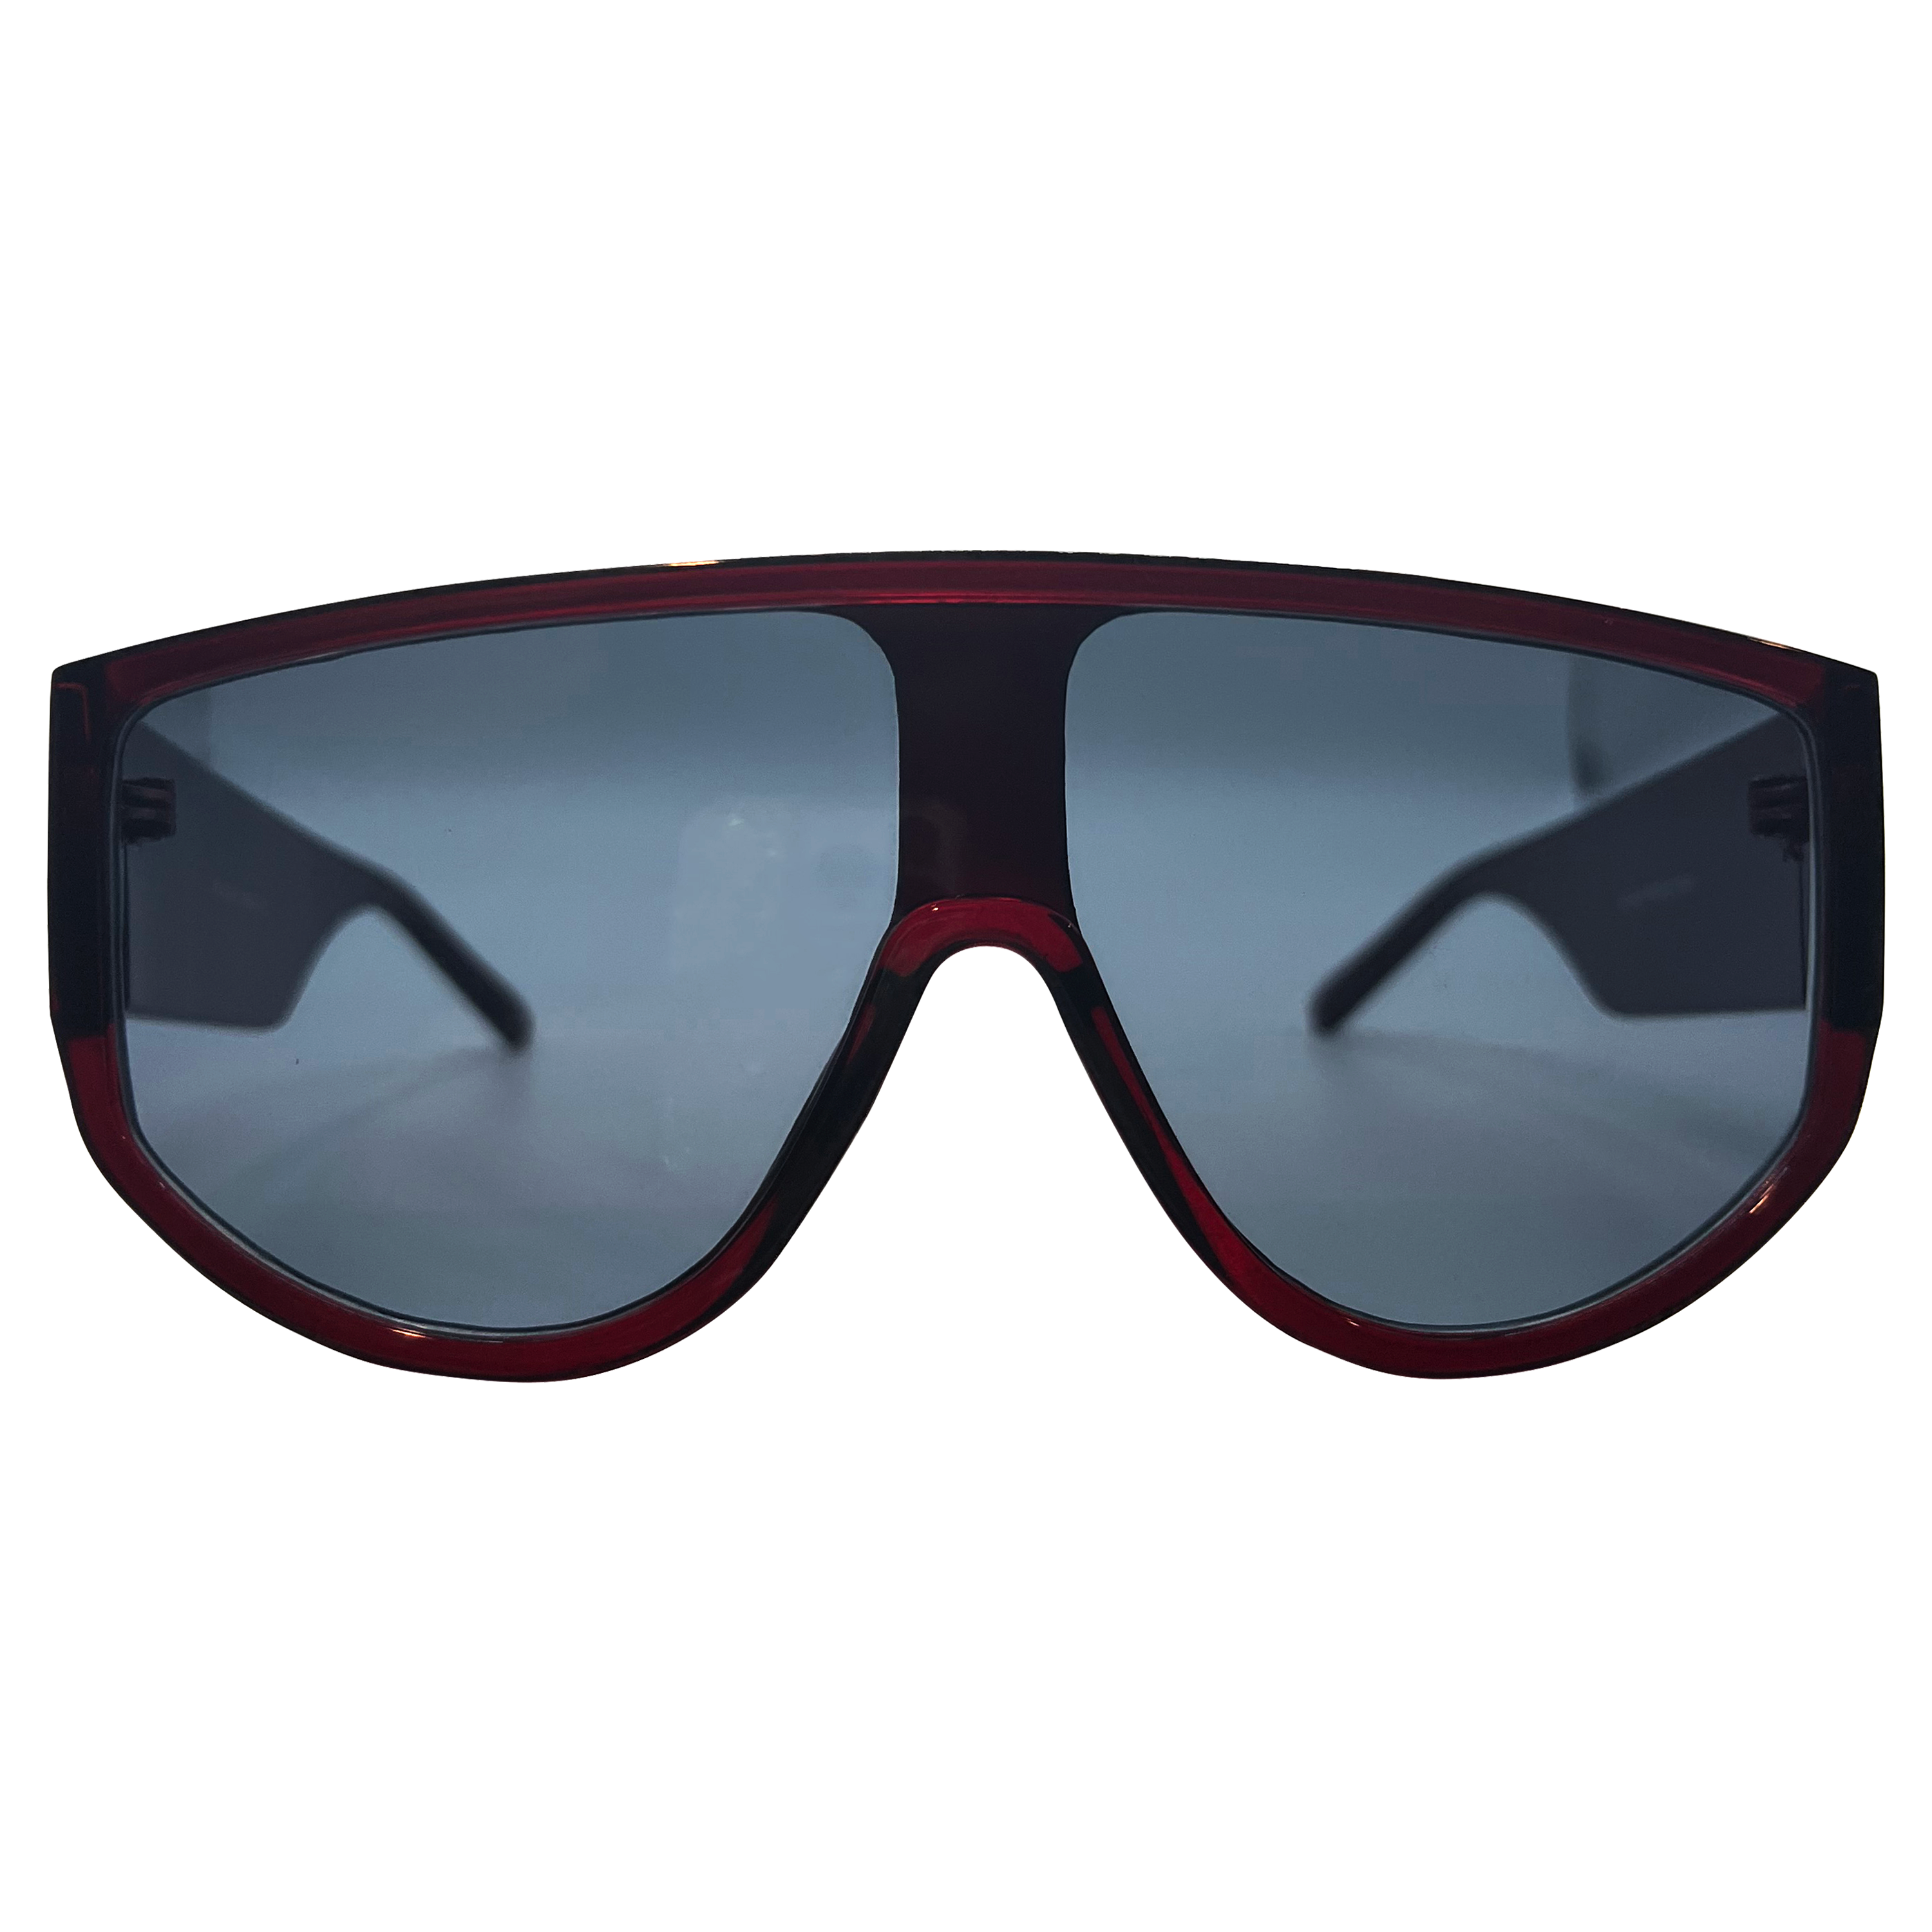 SMOKED OUT Wine/Super Dark Shield Sunglasses